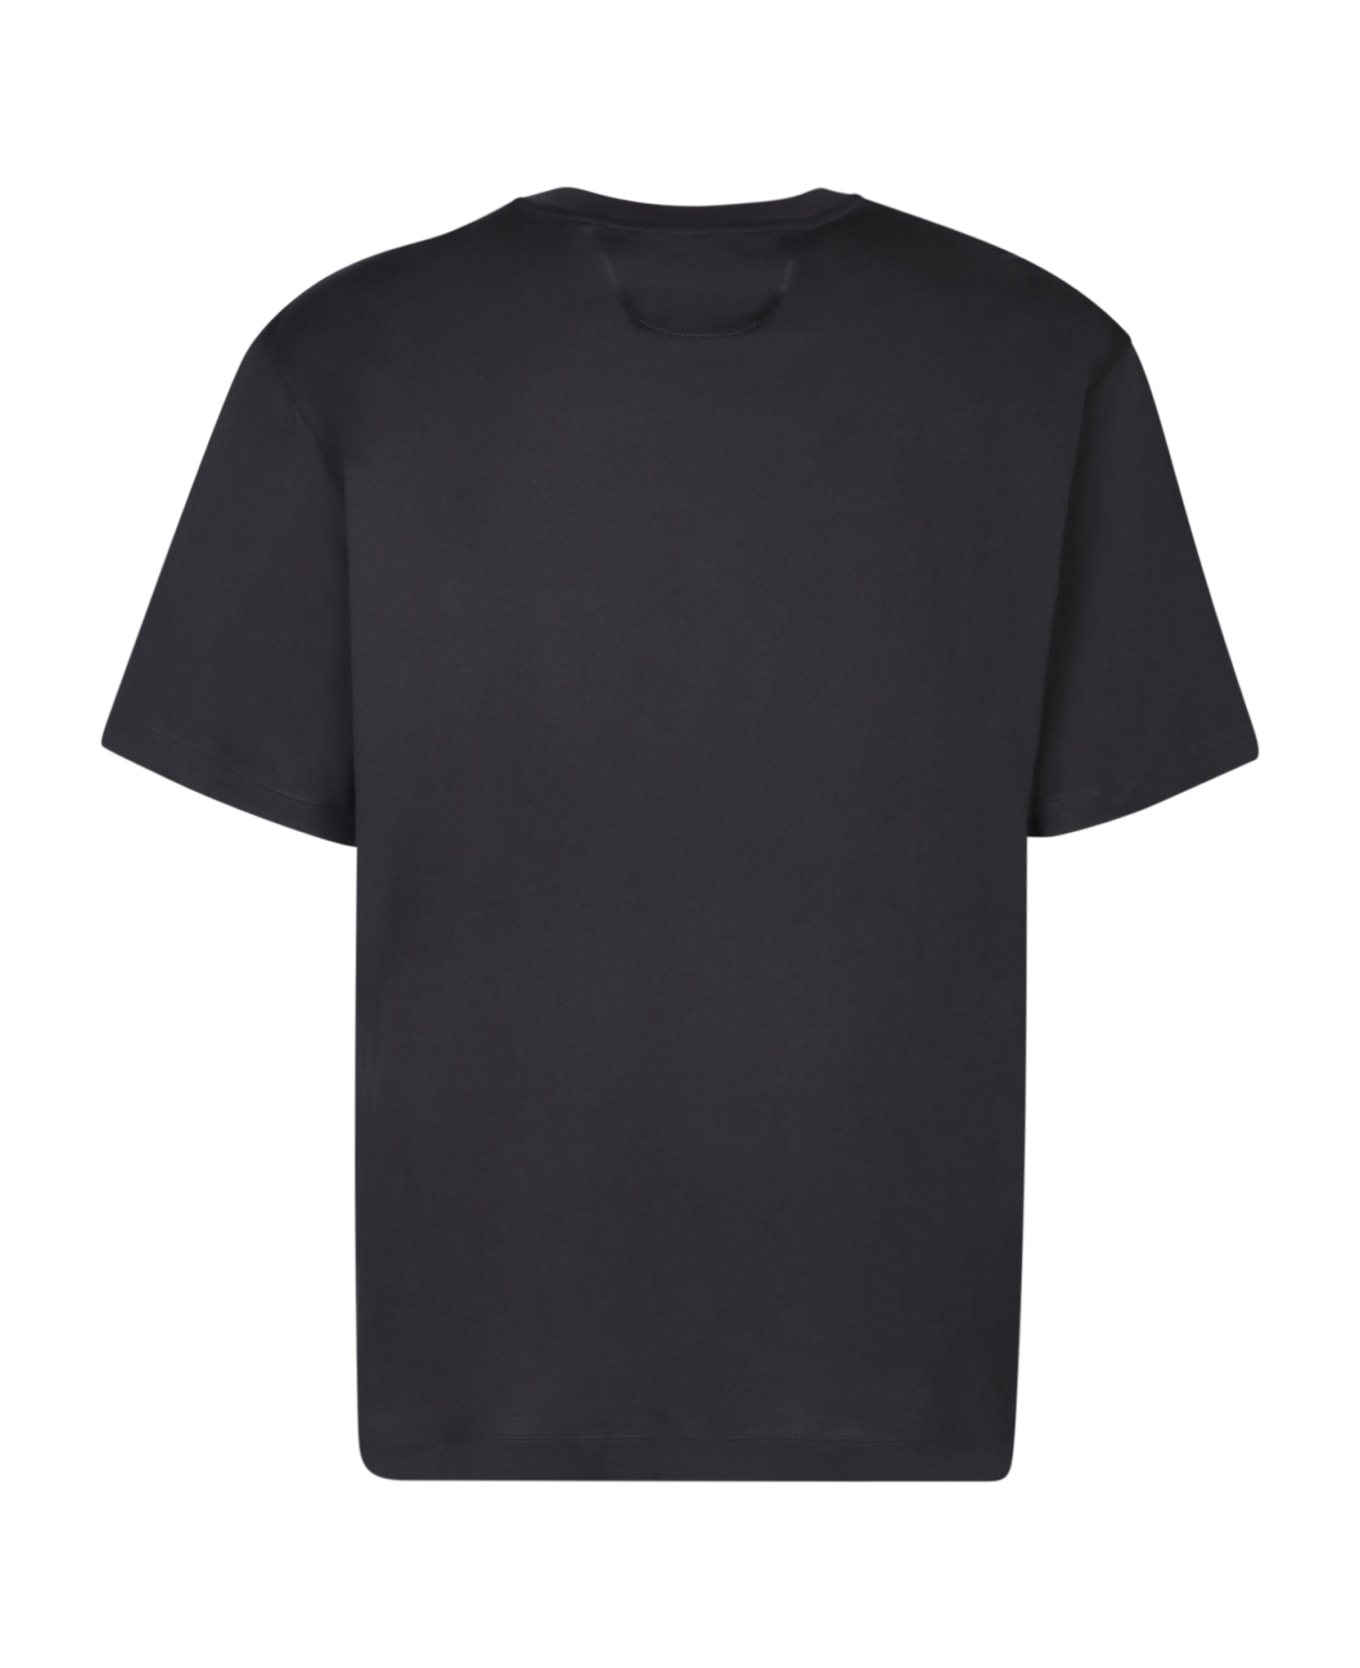 Ferrari Contrasting Logo Black T-shirt - Black